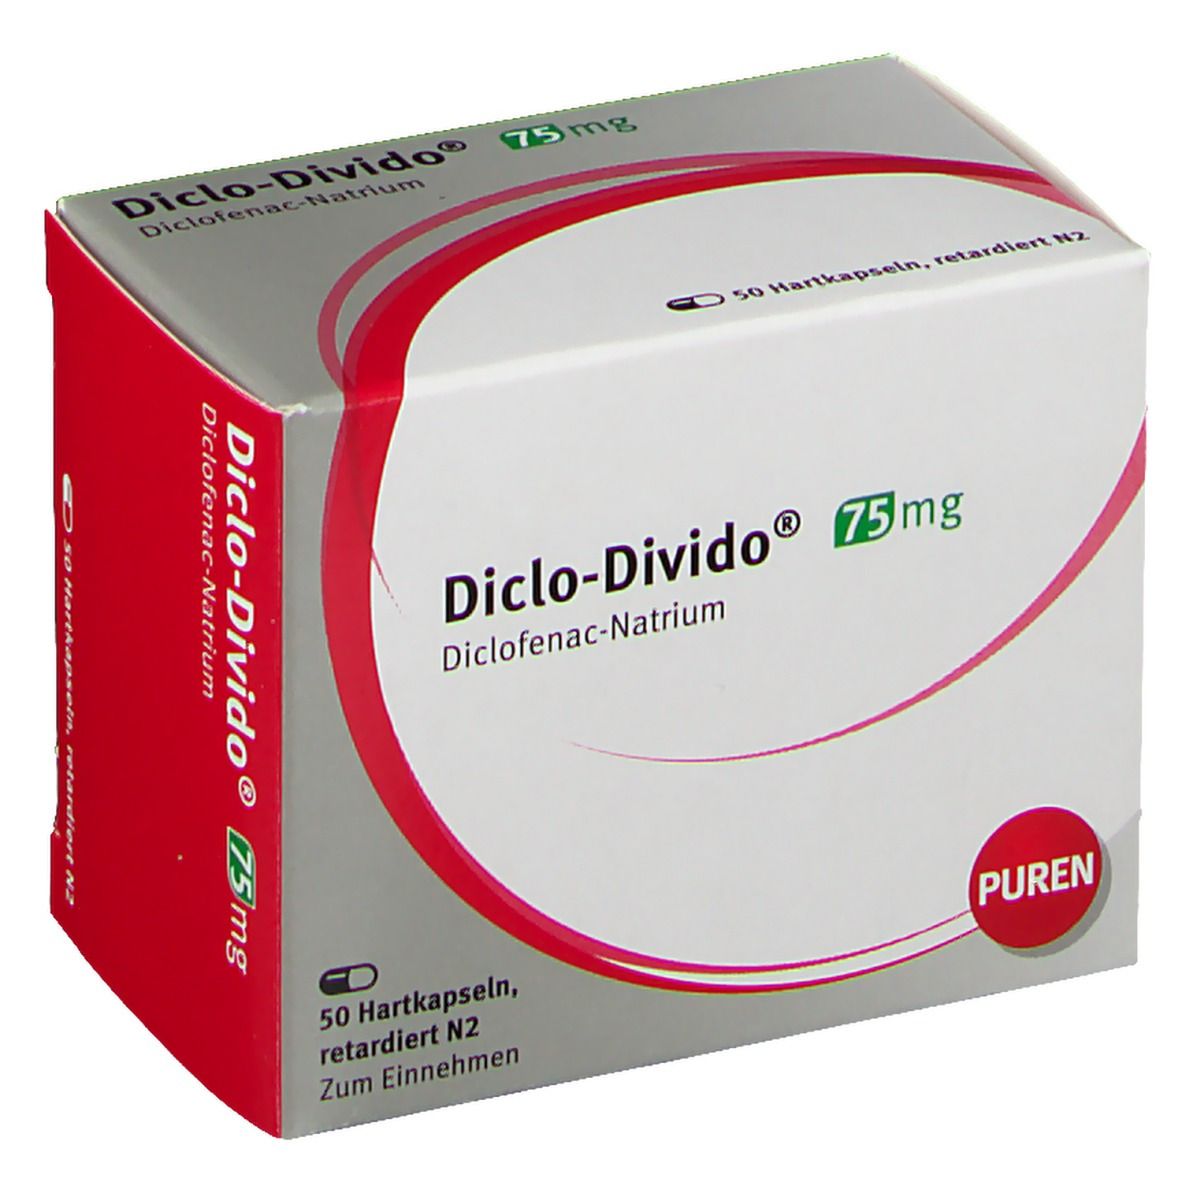 Diclo-Divido® 75 mg